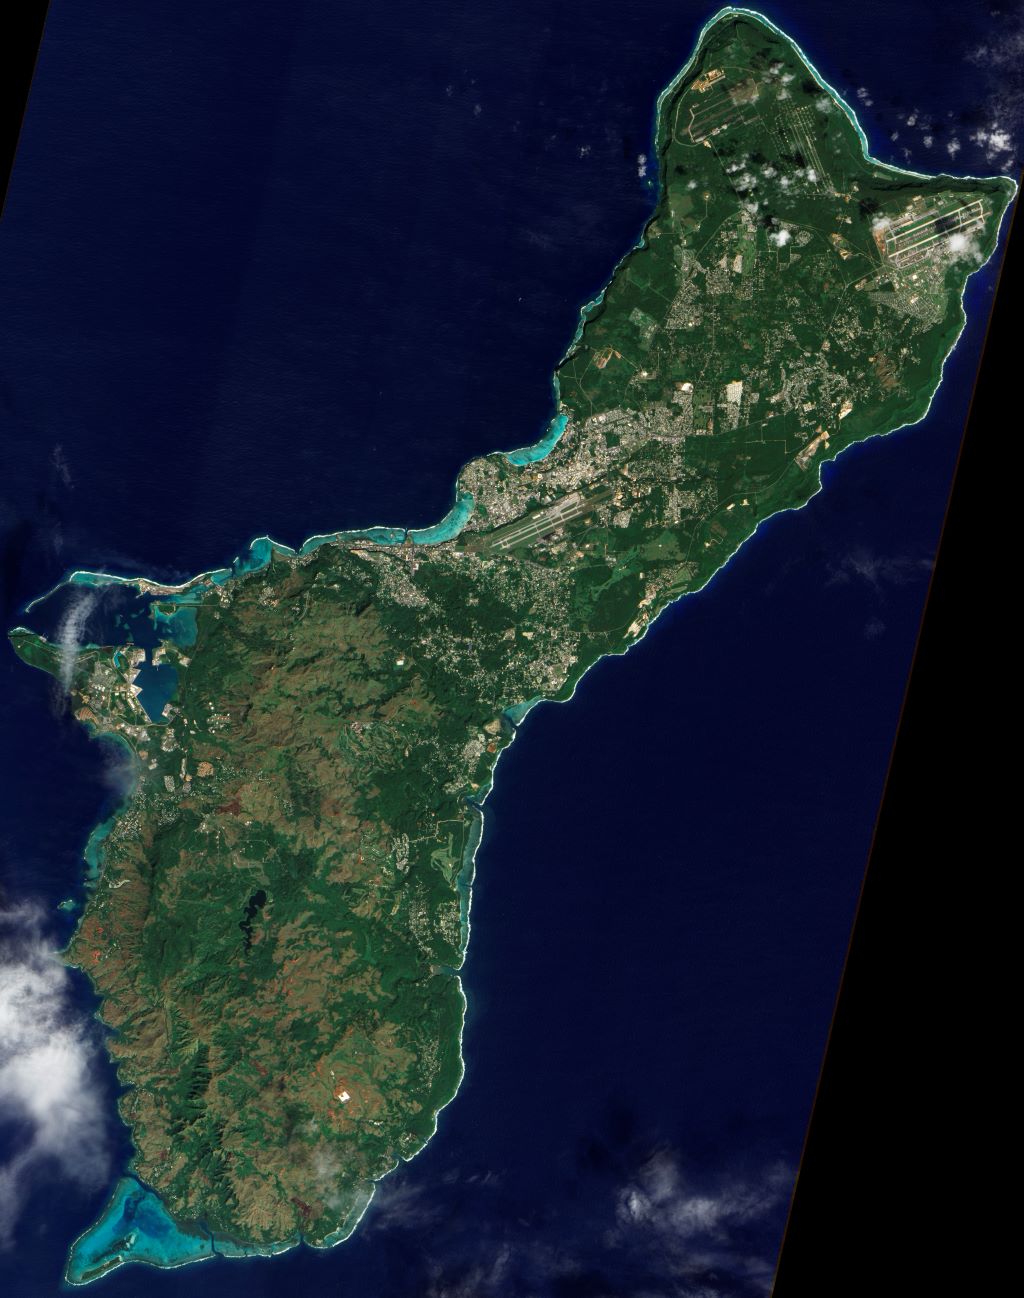 Guam_space_image_(cropped)11.jpg